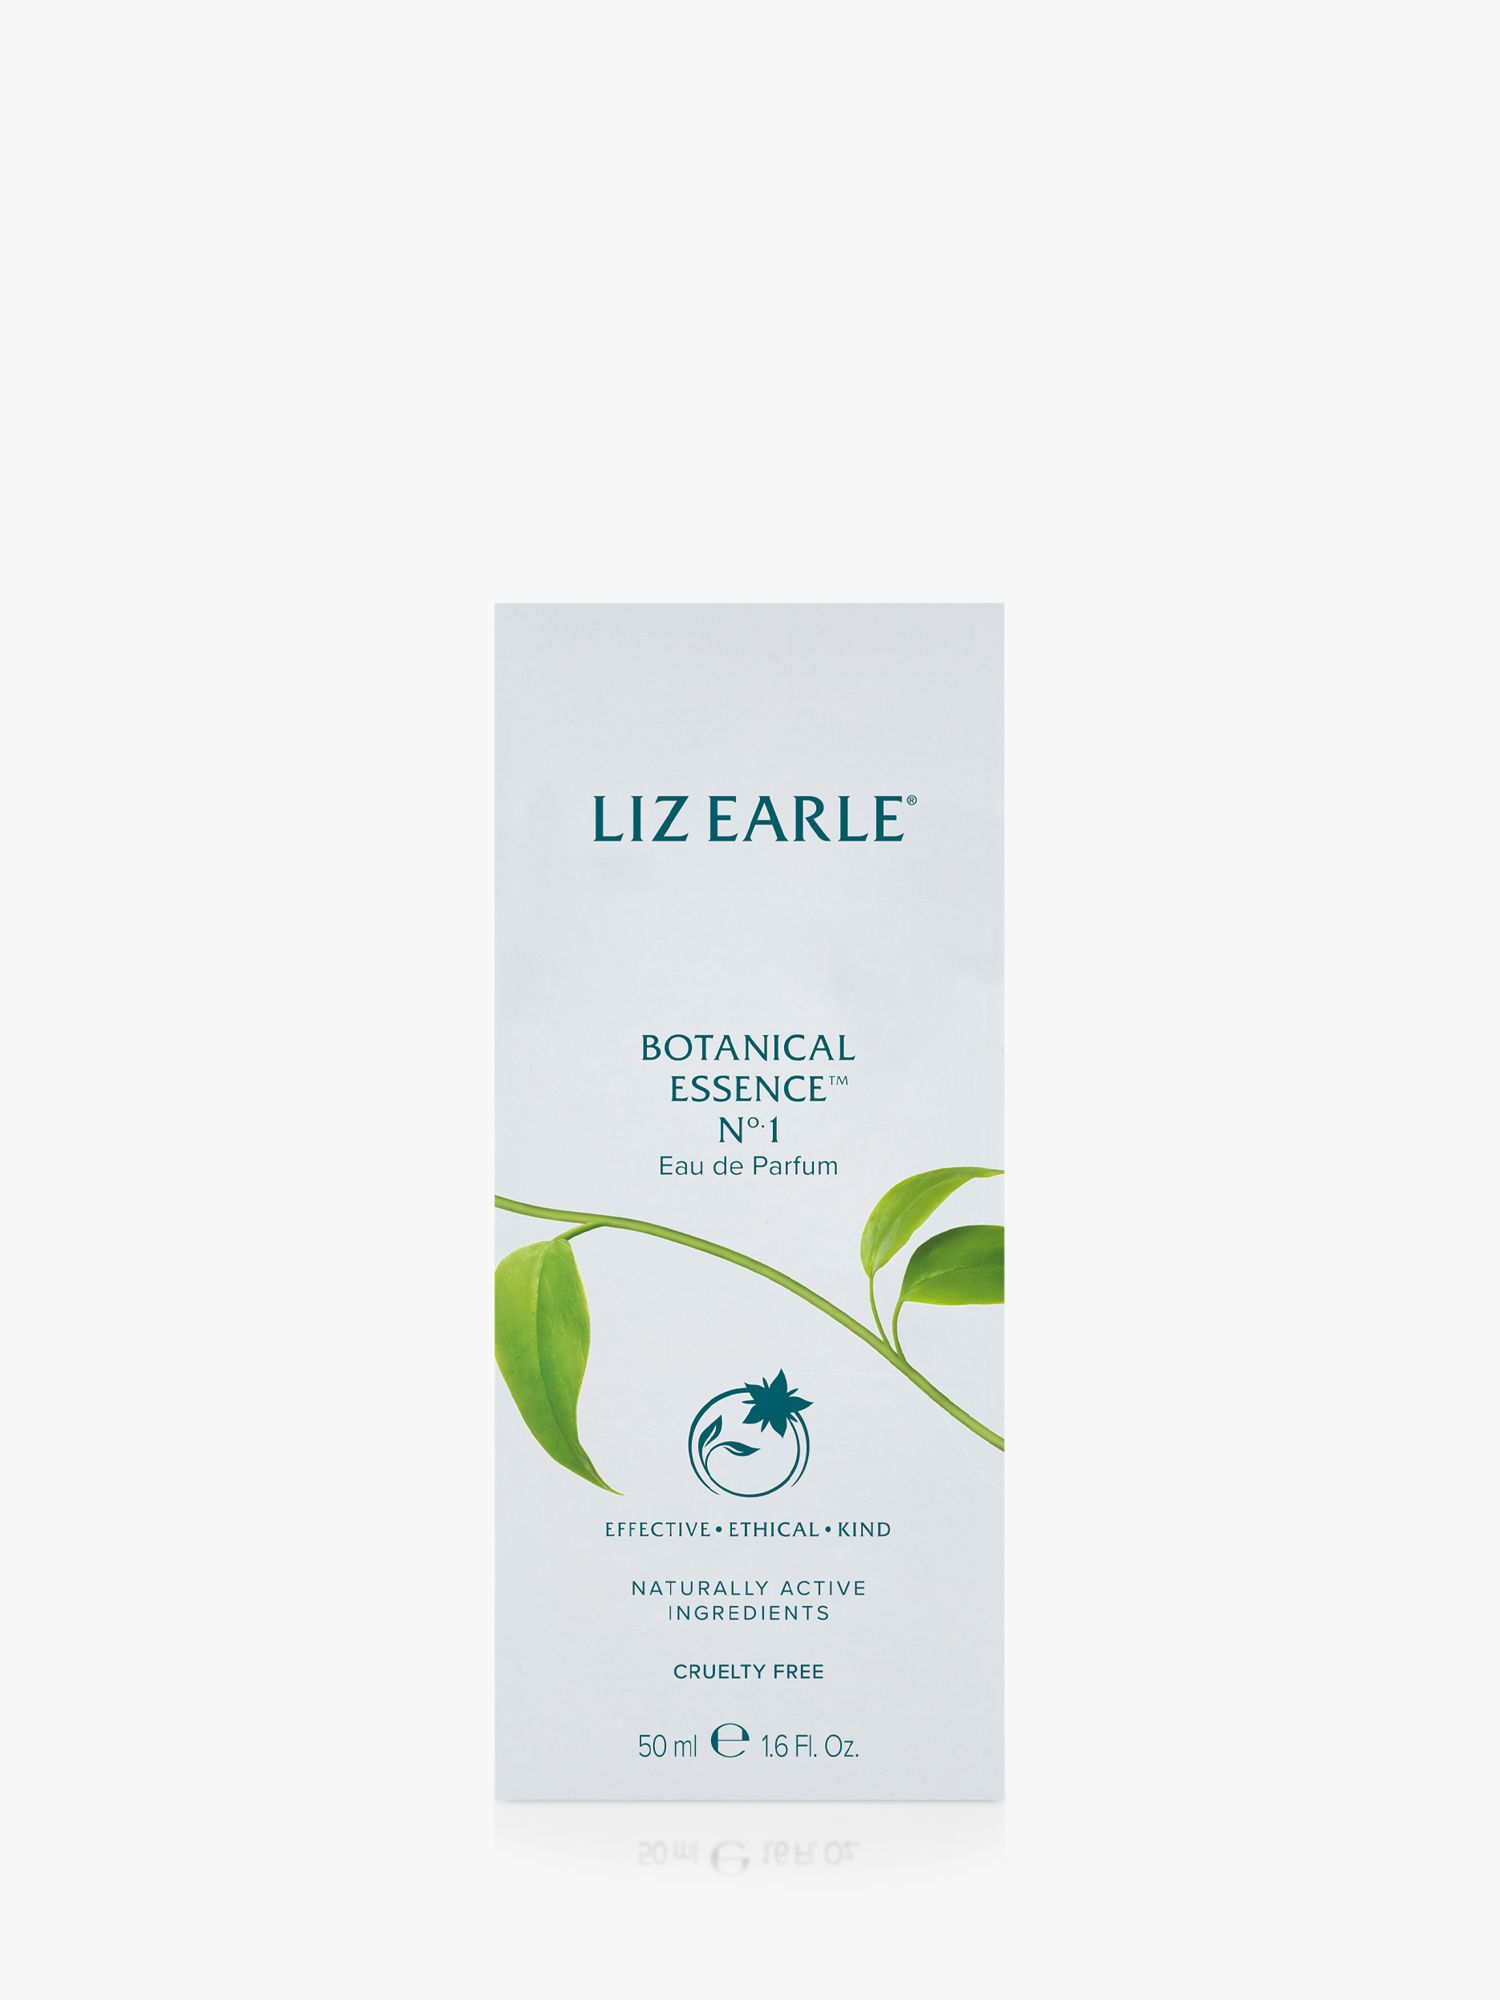 Liz Earle Botanical Essence™ No.1, 50ml